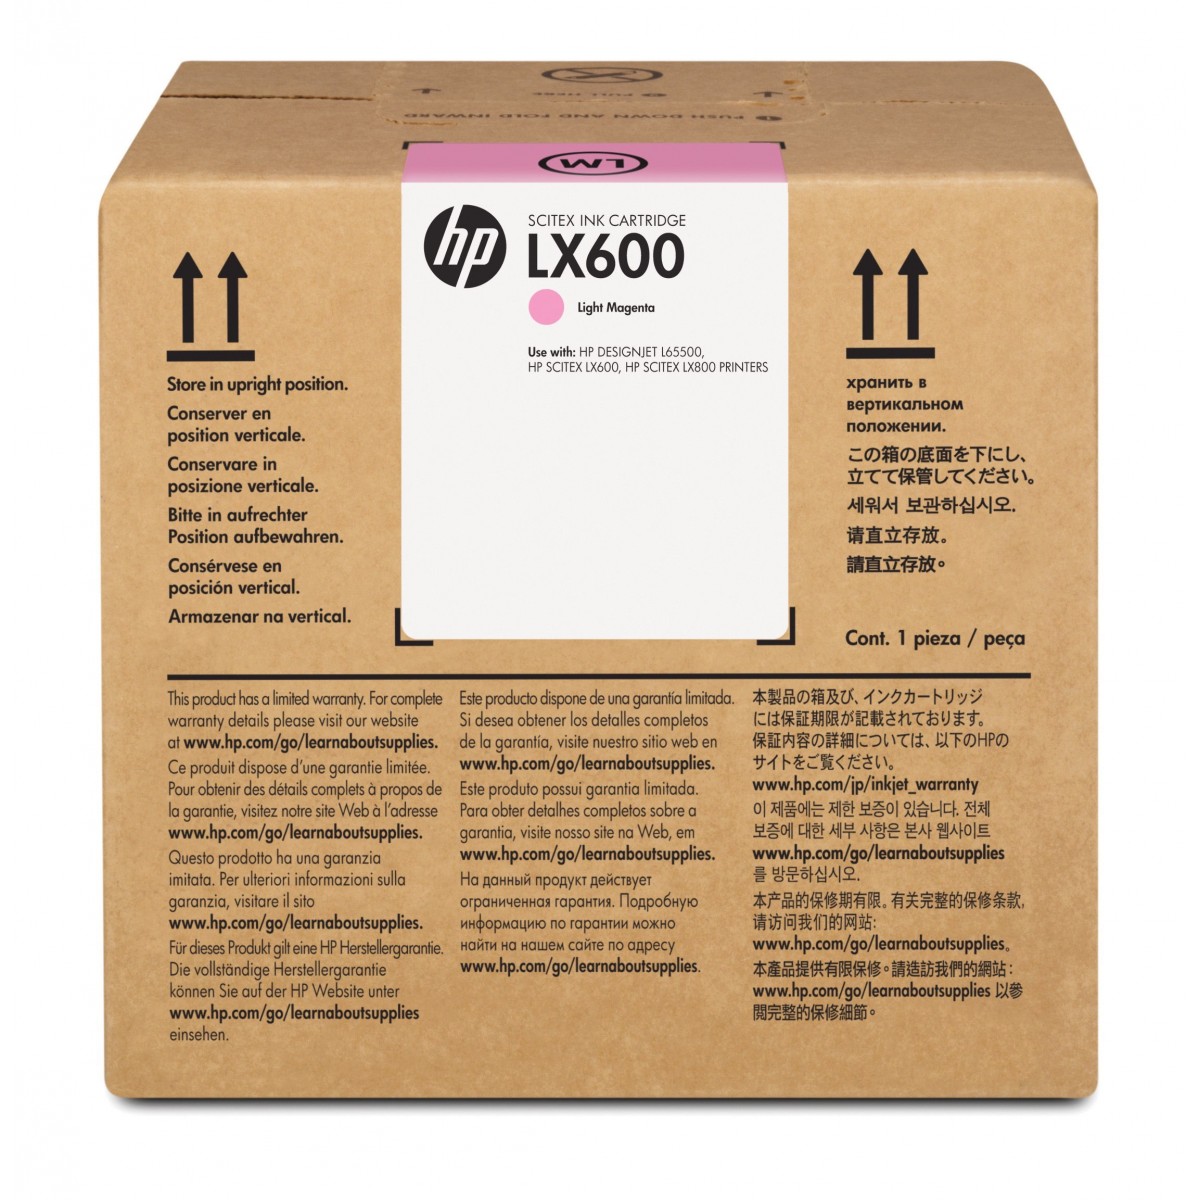 HP LX600 - Original - Pigment-based ink - Light magenta - HP - HP Scitex LX600 Printer - HP Scitex LX800 Printer - HP Designjet 